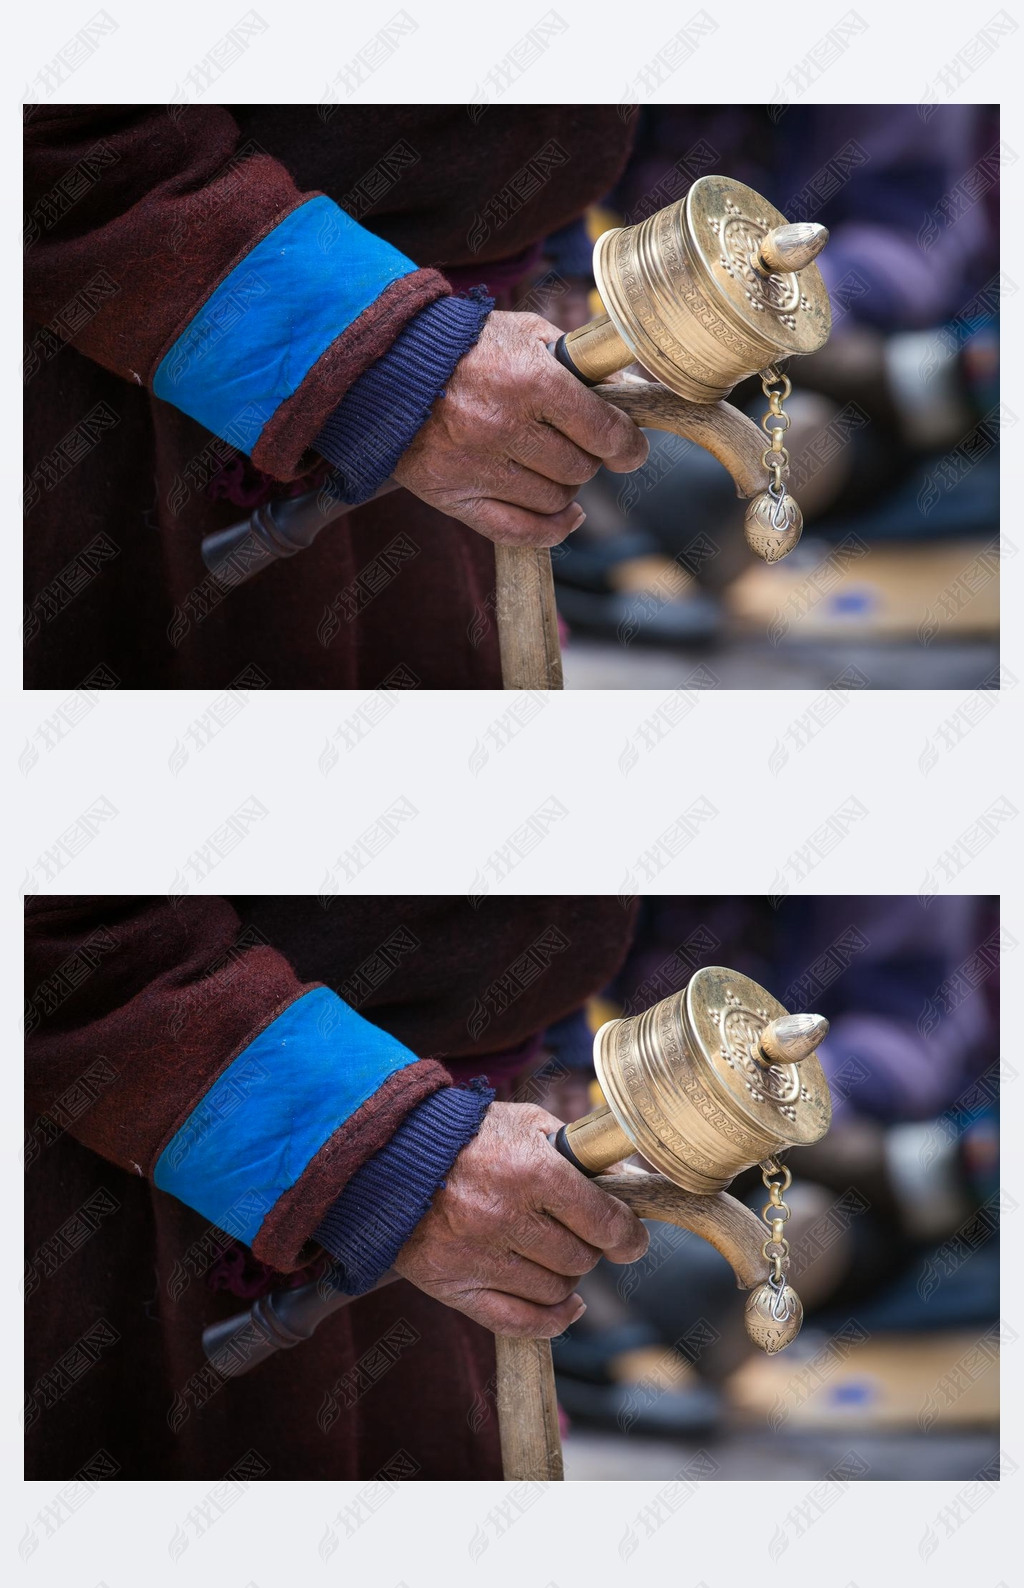 Old Tibetan man holding wooden walking stick and buddhist prayer wheel, Ladakh, India